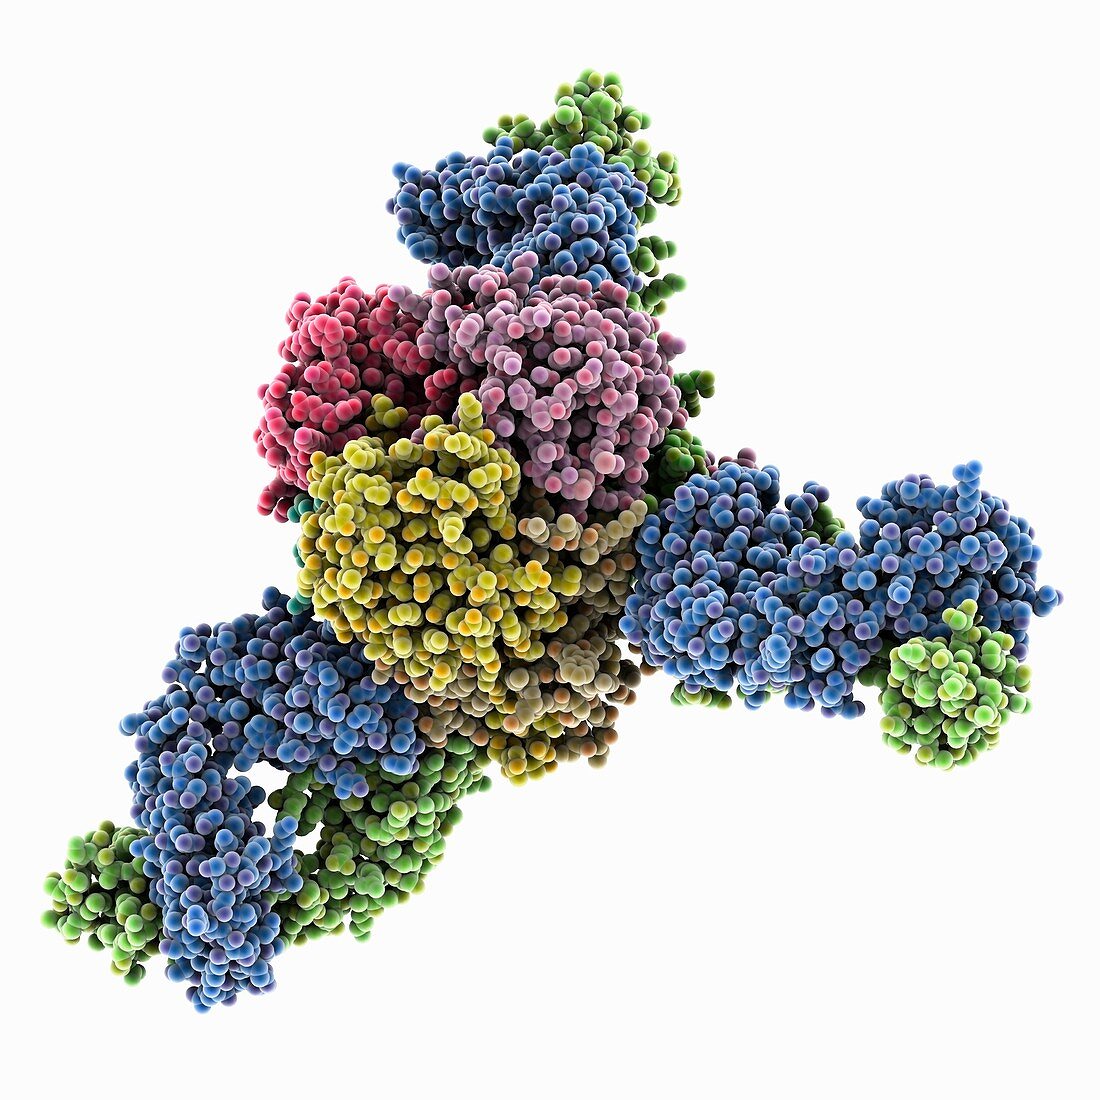 Lassa virus protein with antibody, molecular model